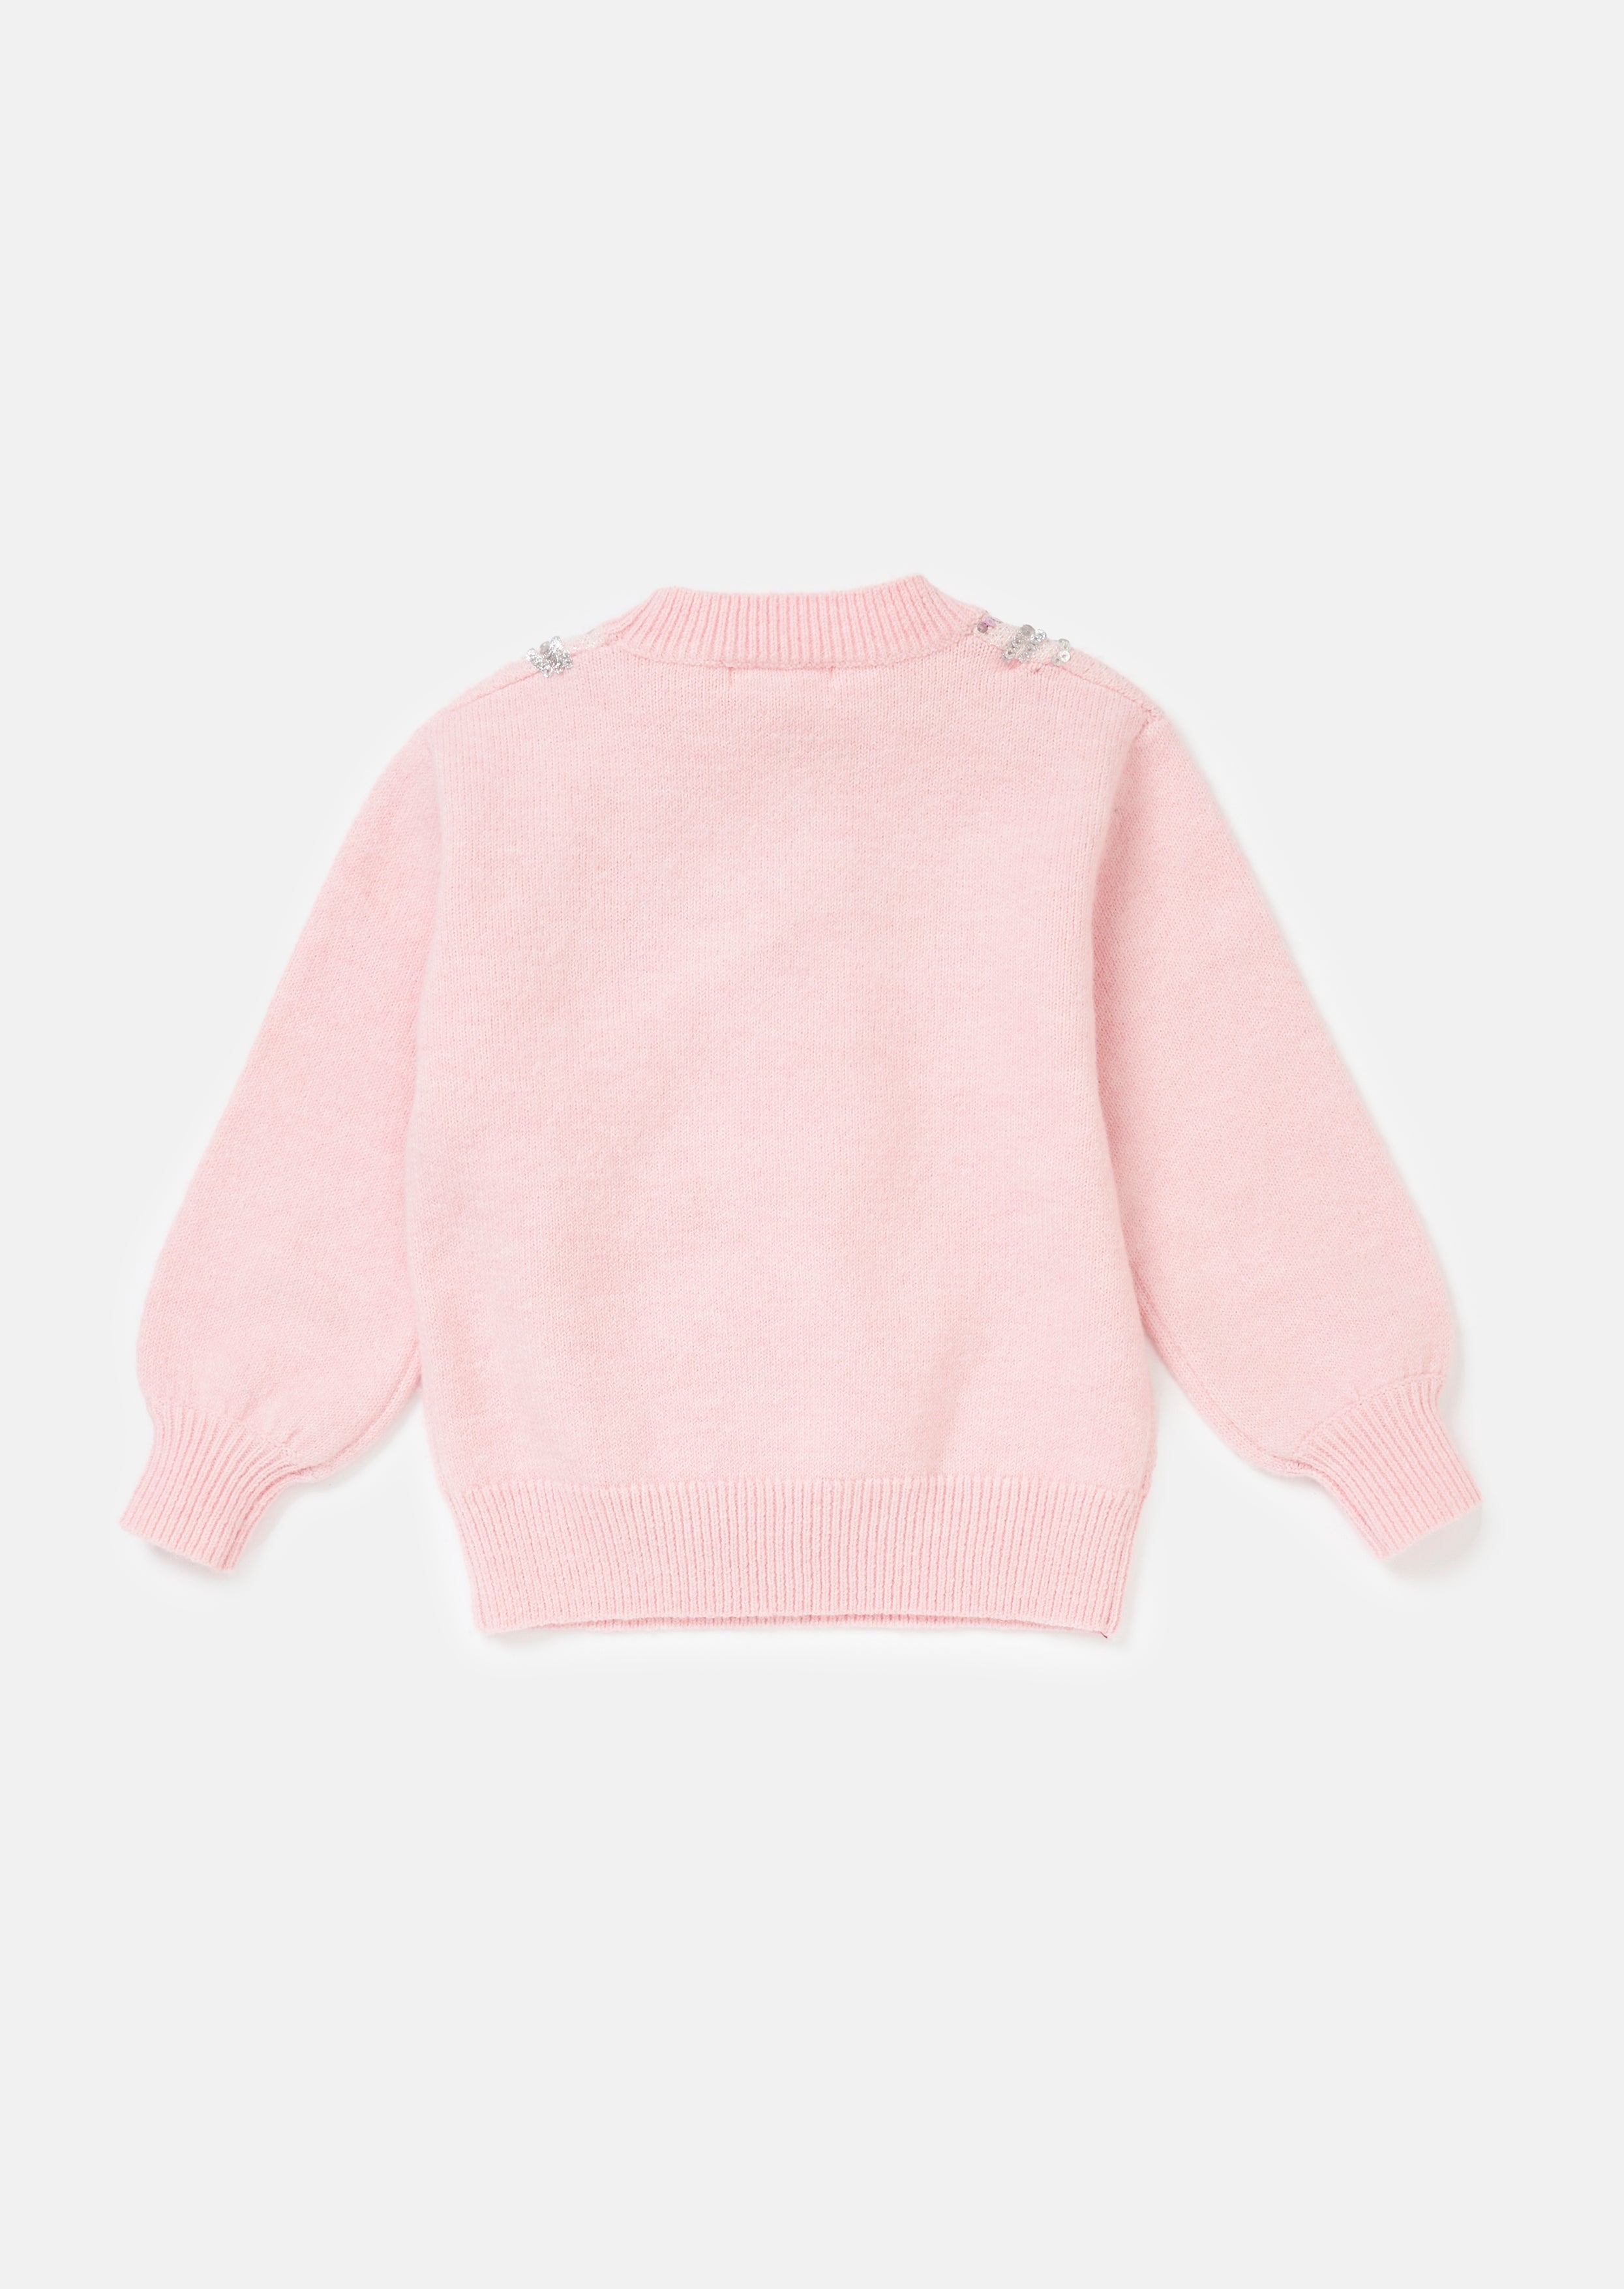 Girls Sequin Embellished Solid Pink Sweater